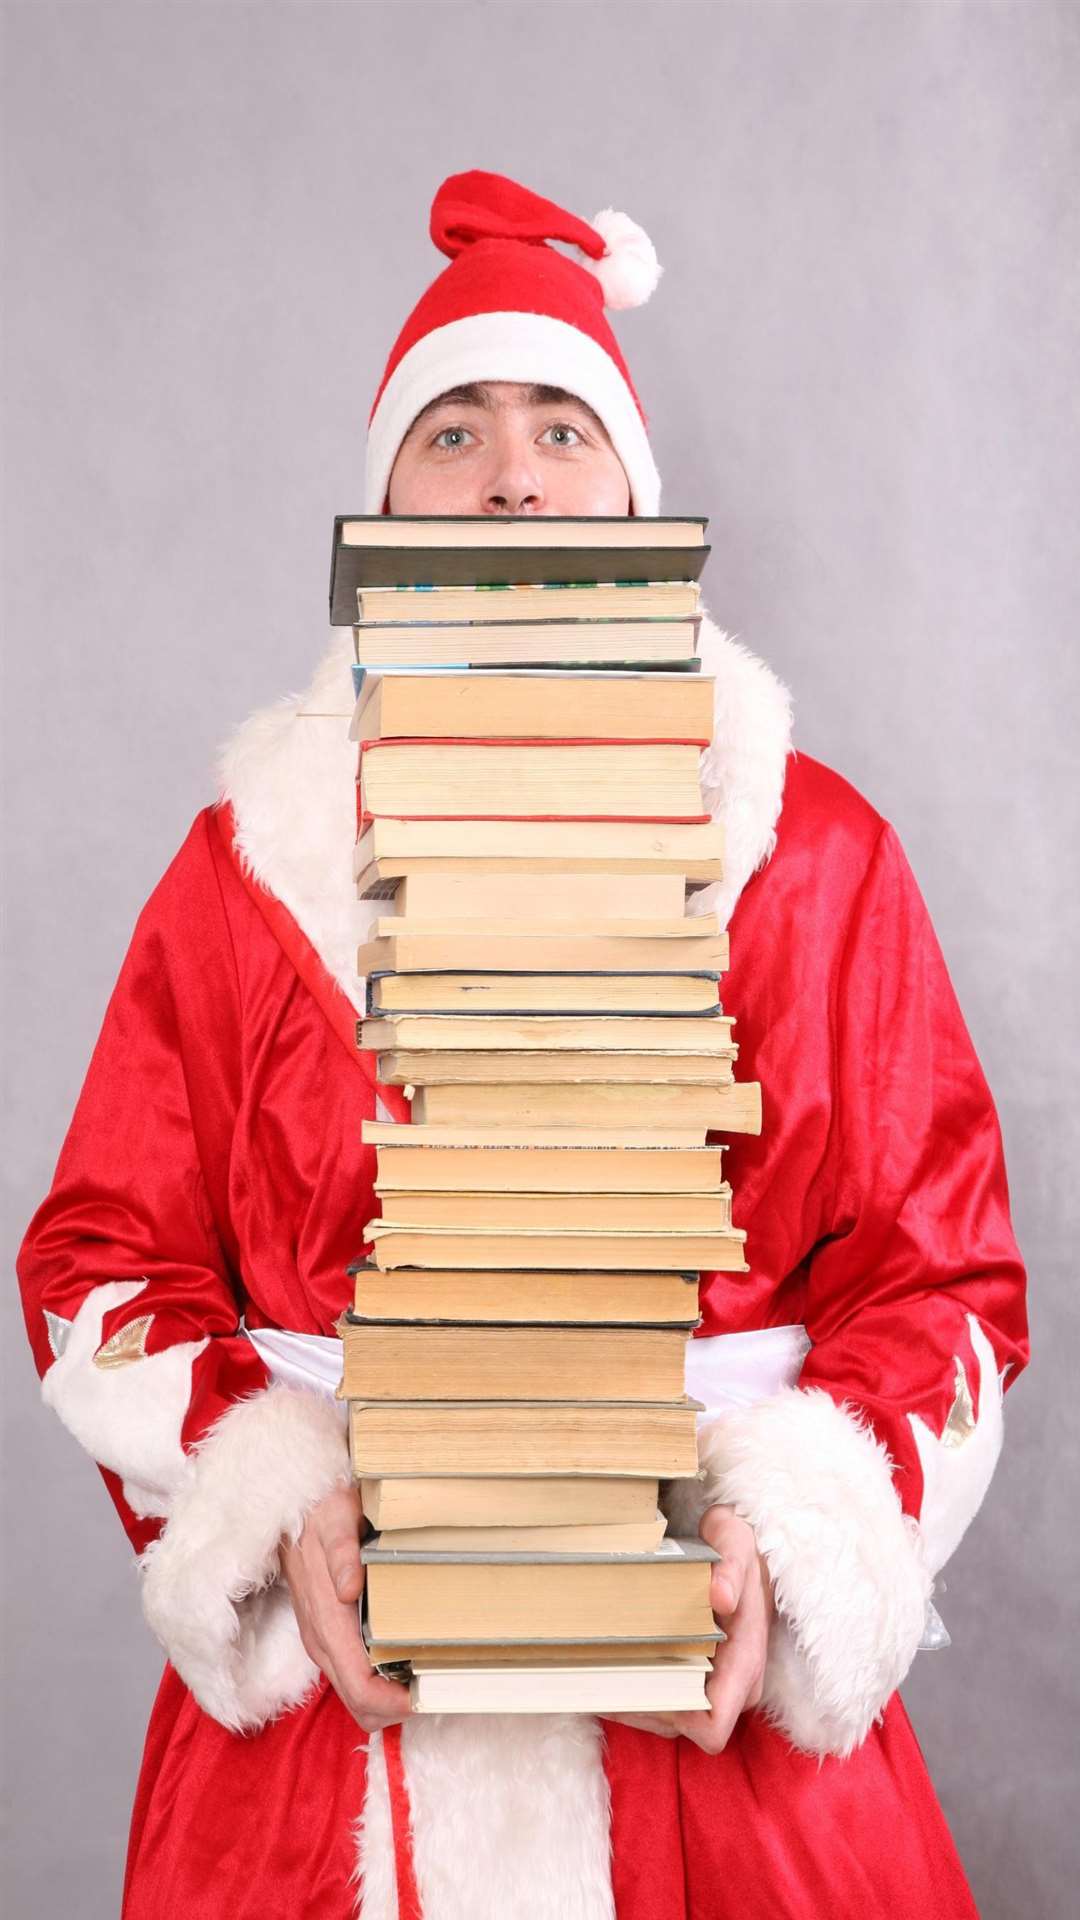 What books will Santa bring?